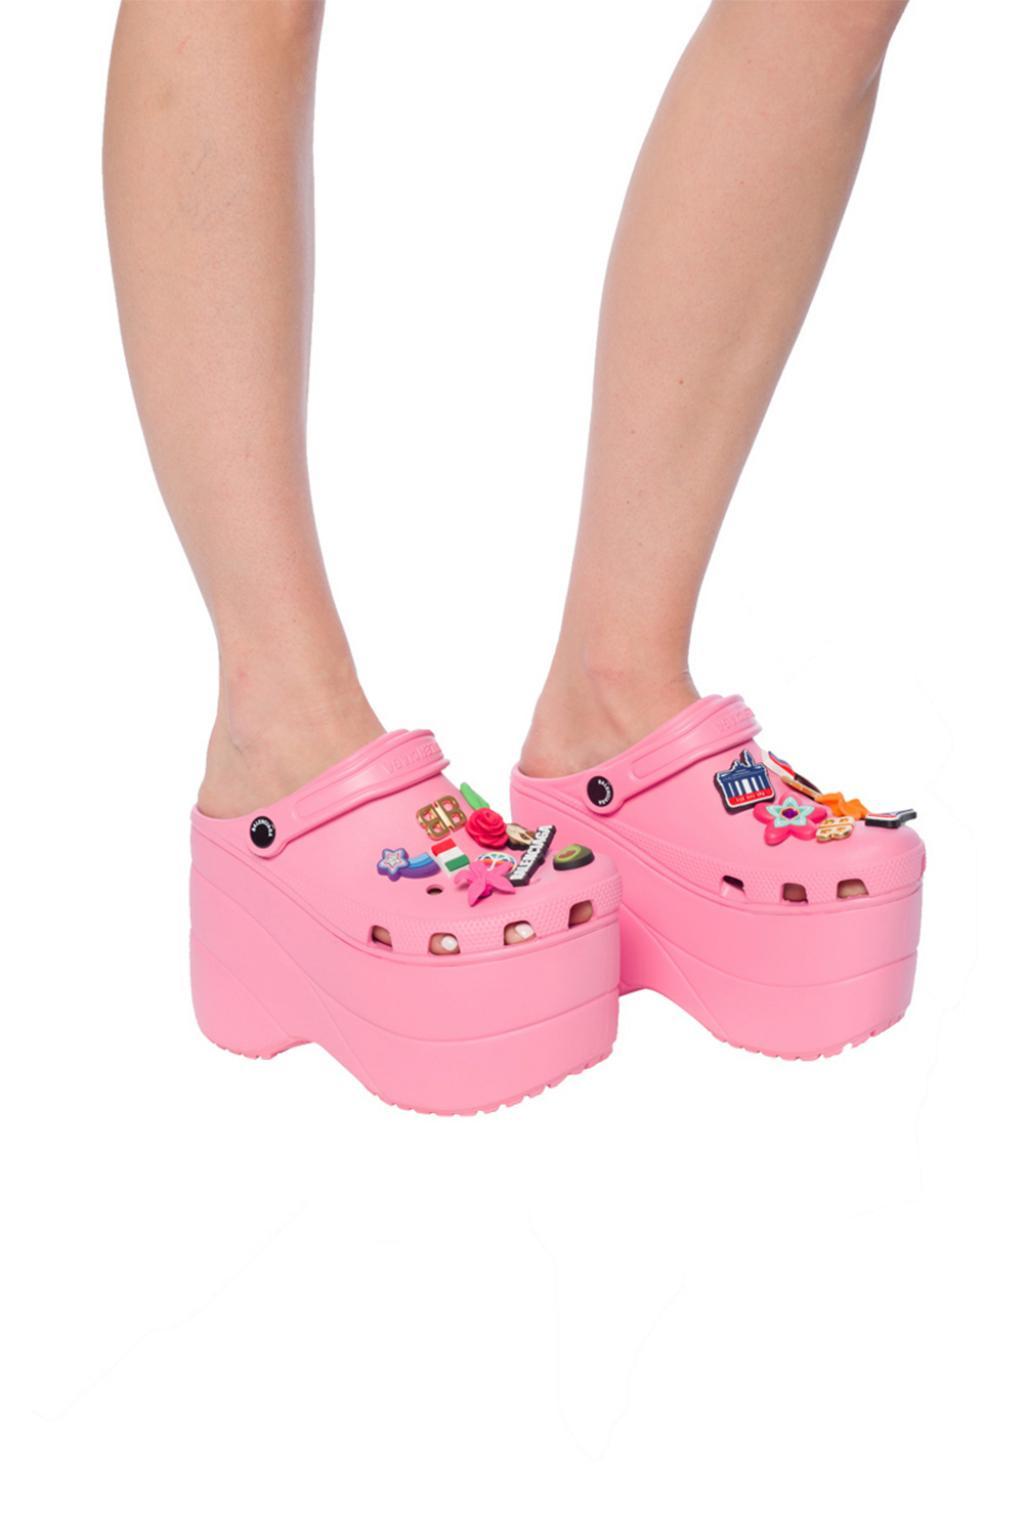 Balenciaga Rubber X Crocs in Pink - Lyst